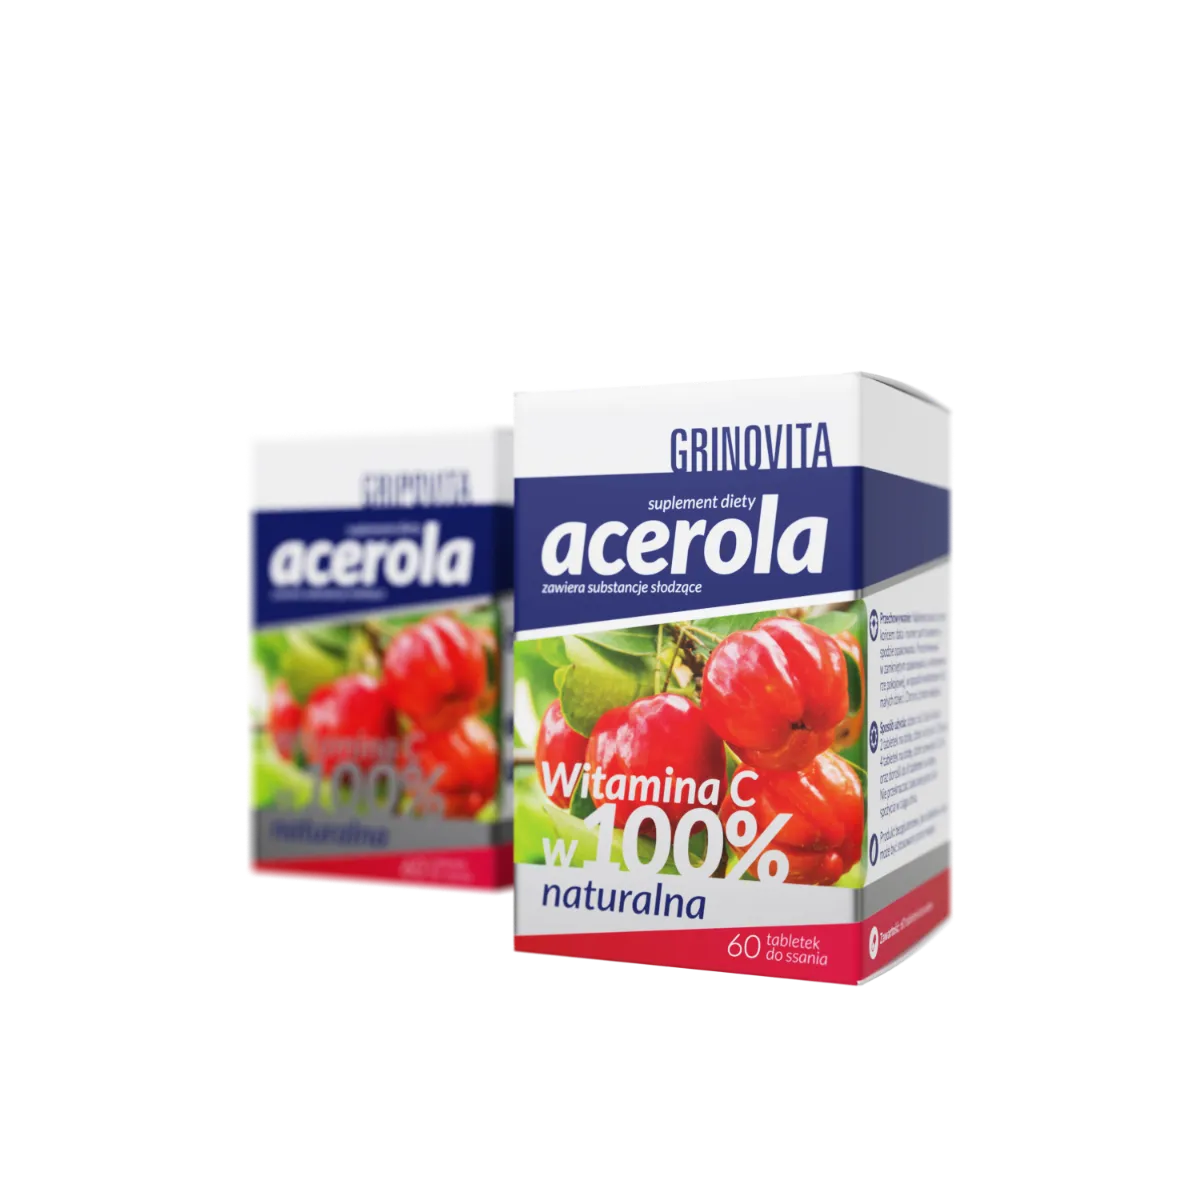 Acerola Grinovita, suplement diety, 60 tabletek do ssania 